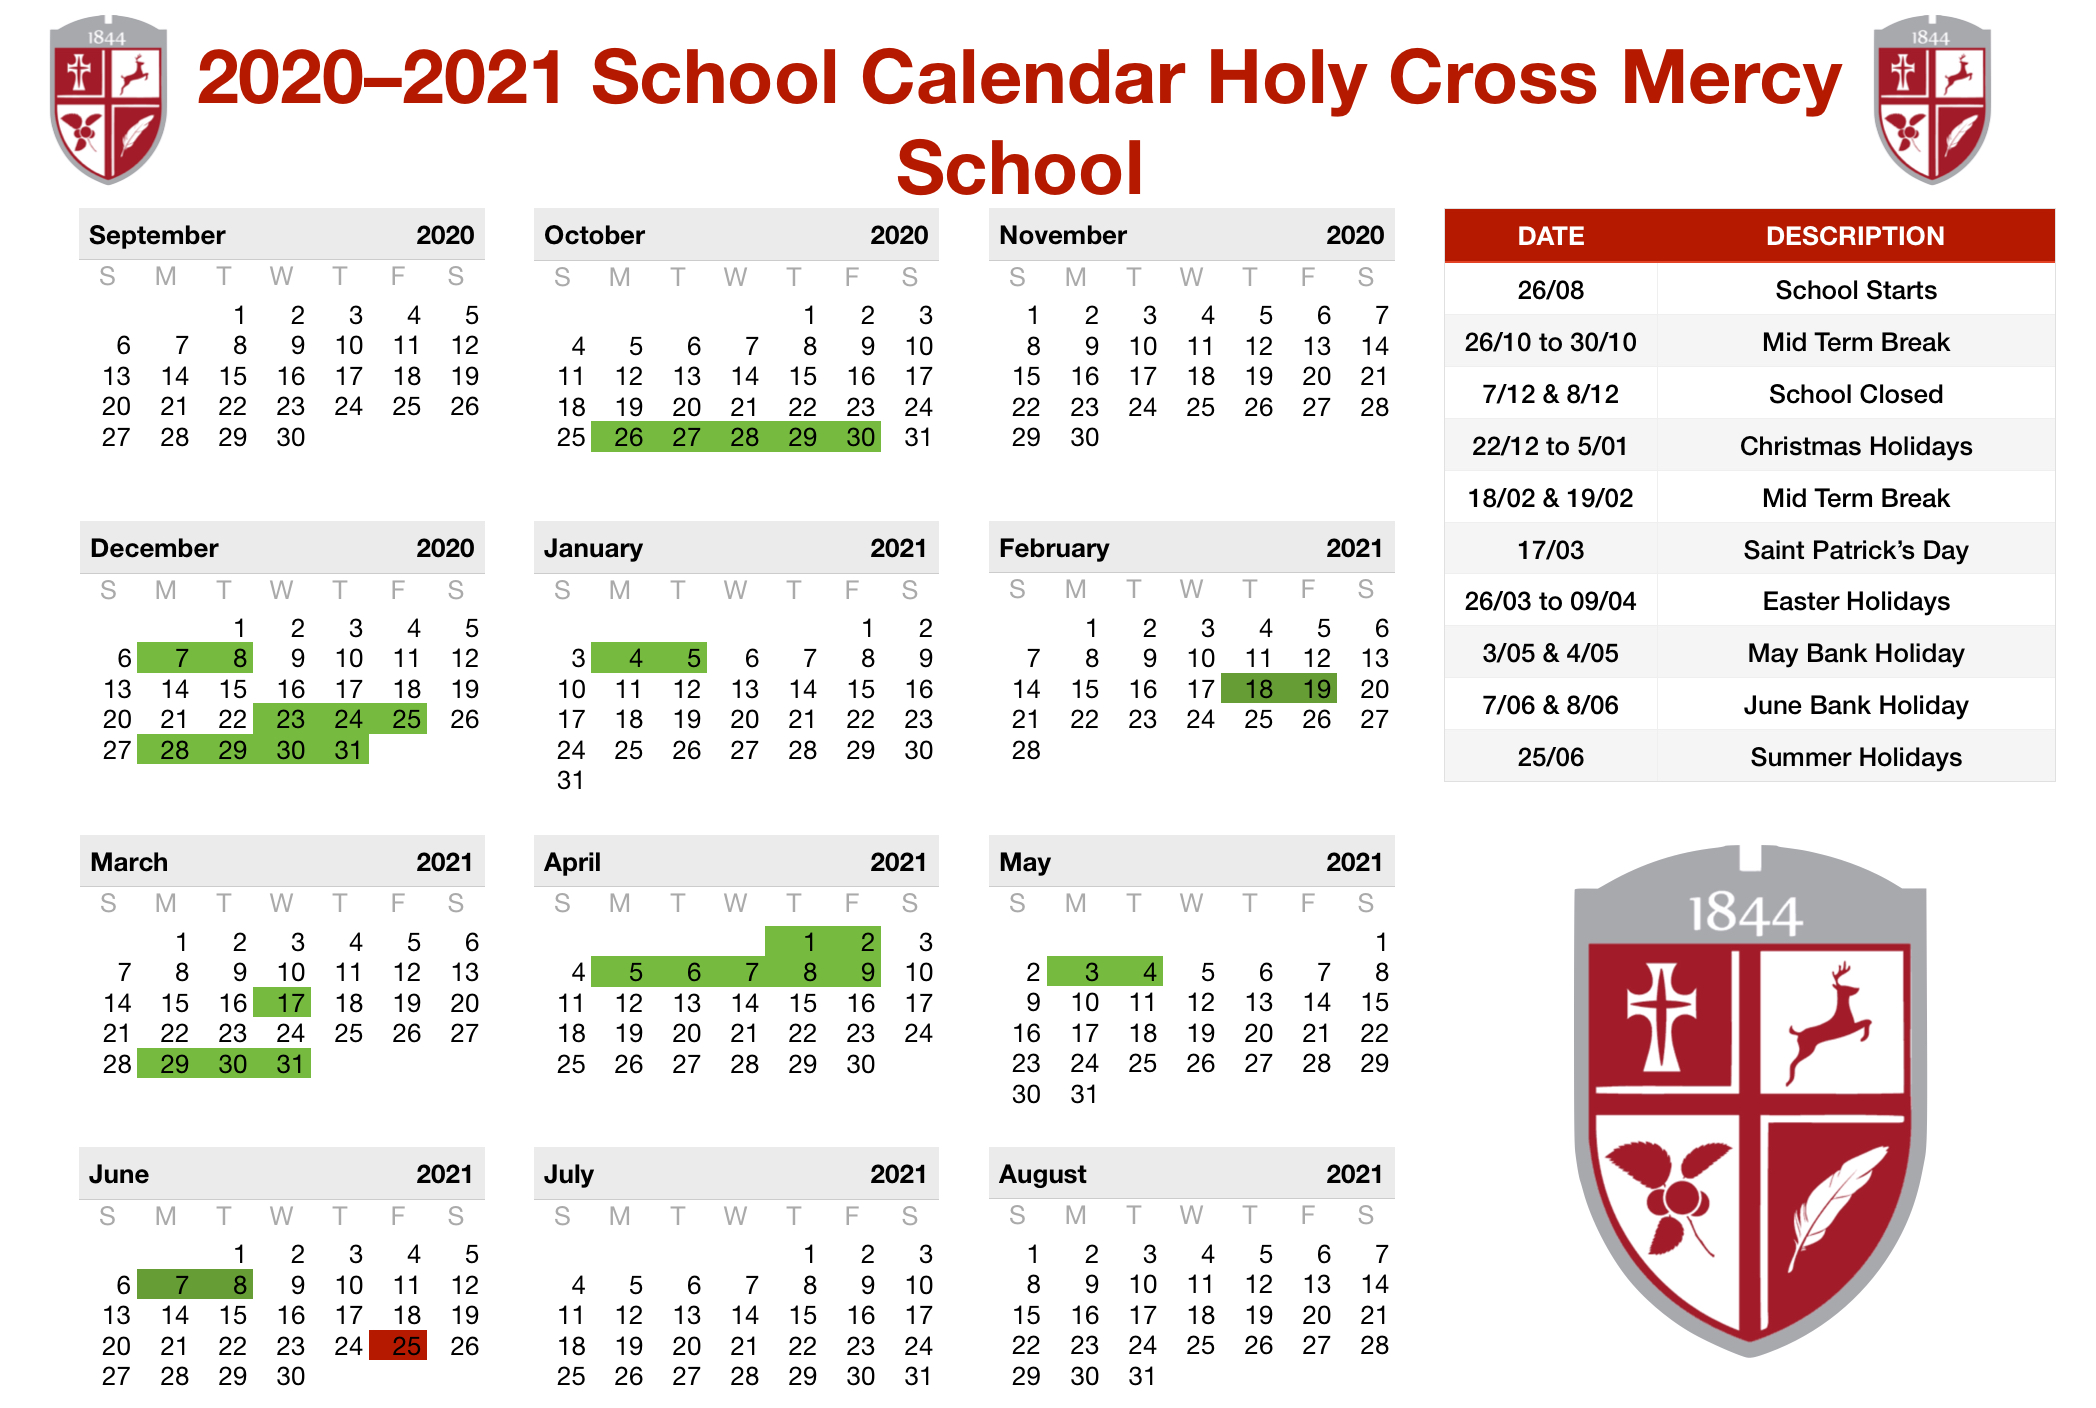 School Calendar 2020 to 2021 Holy Cross Mercy School